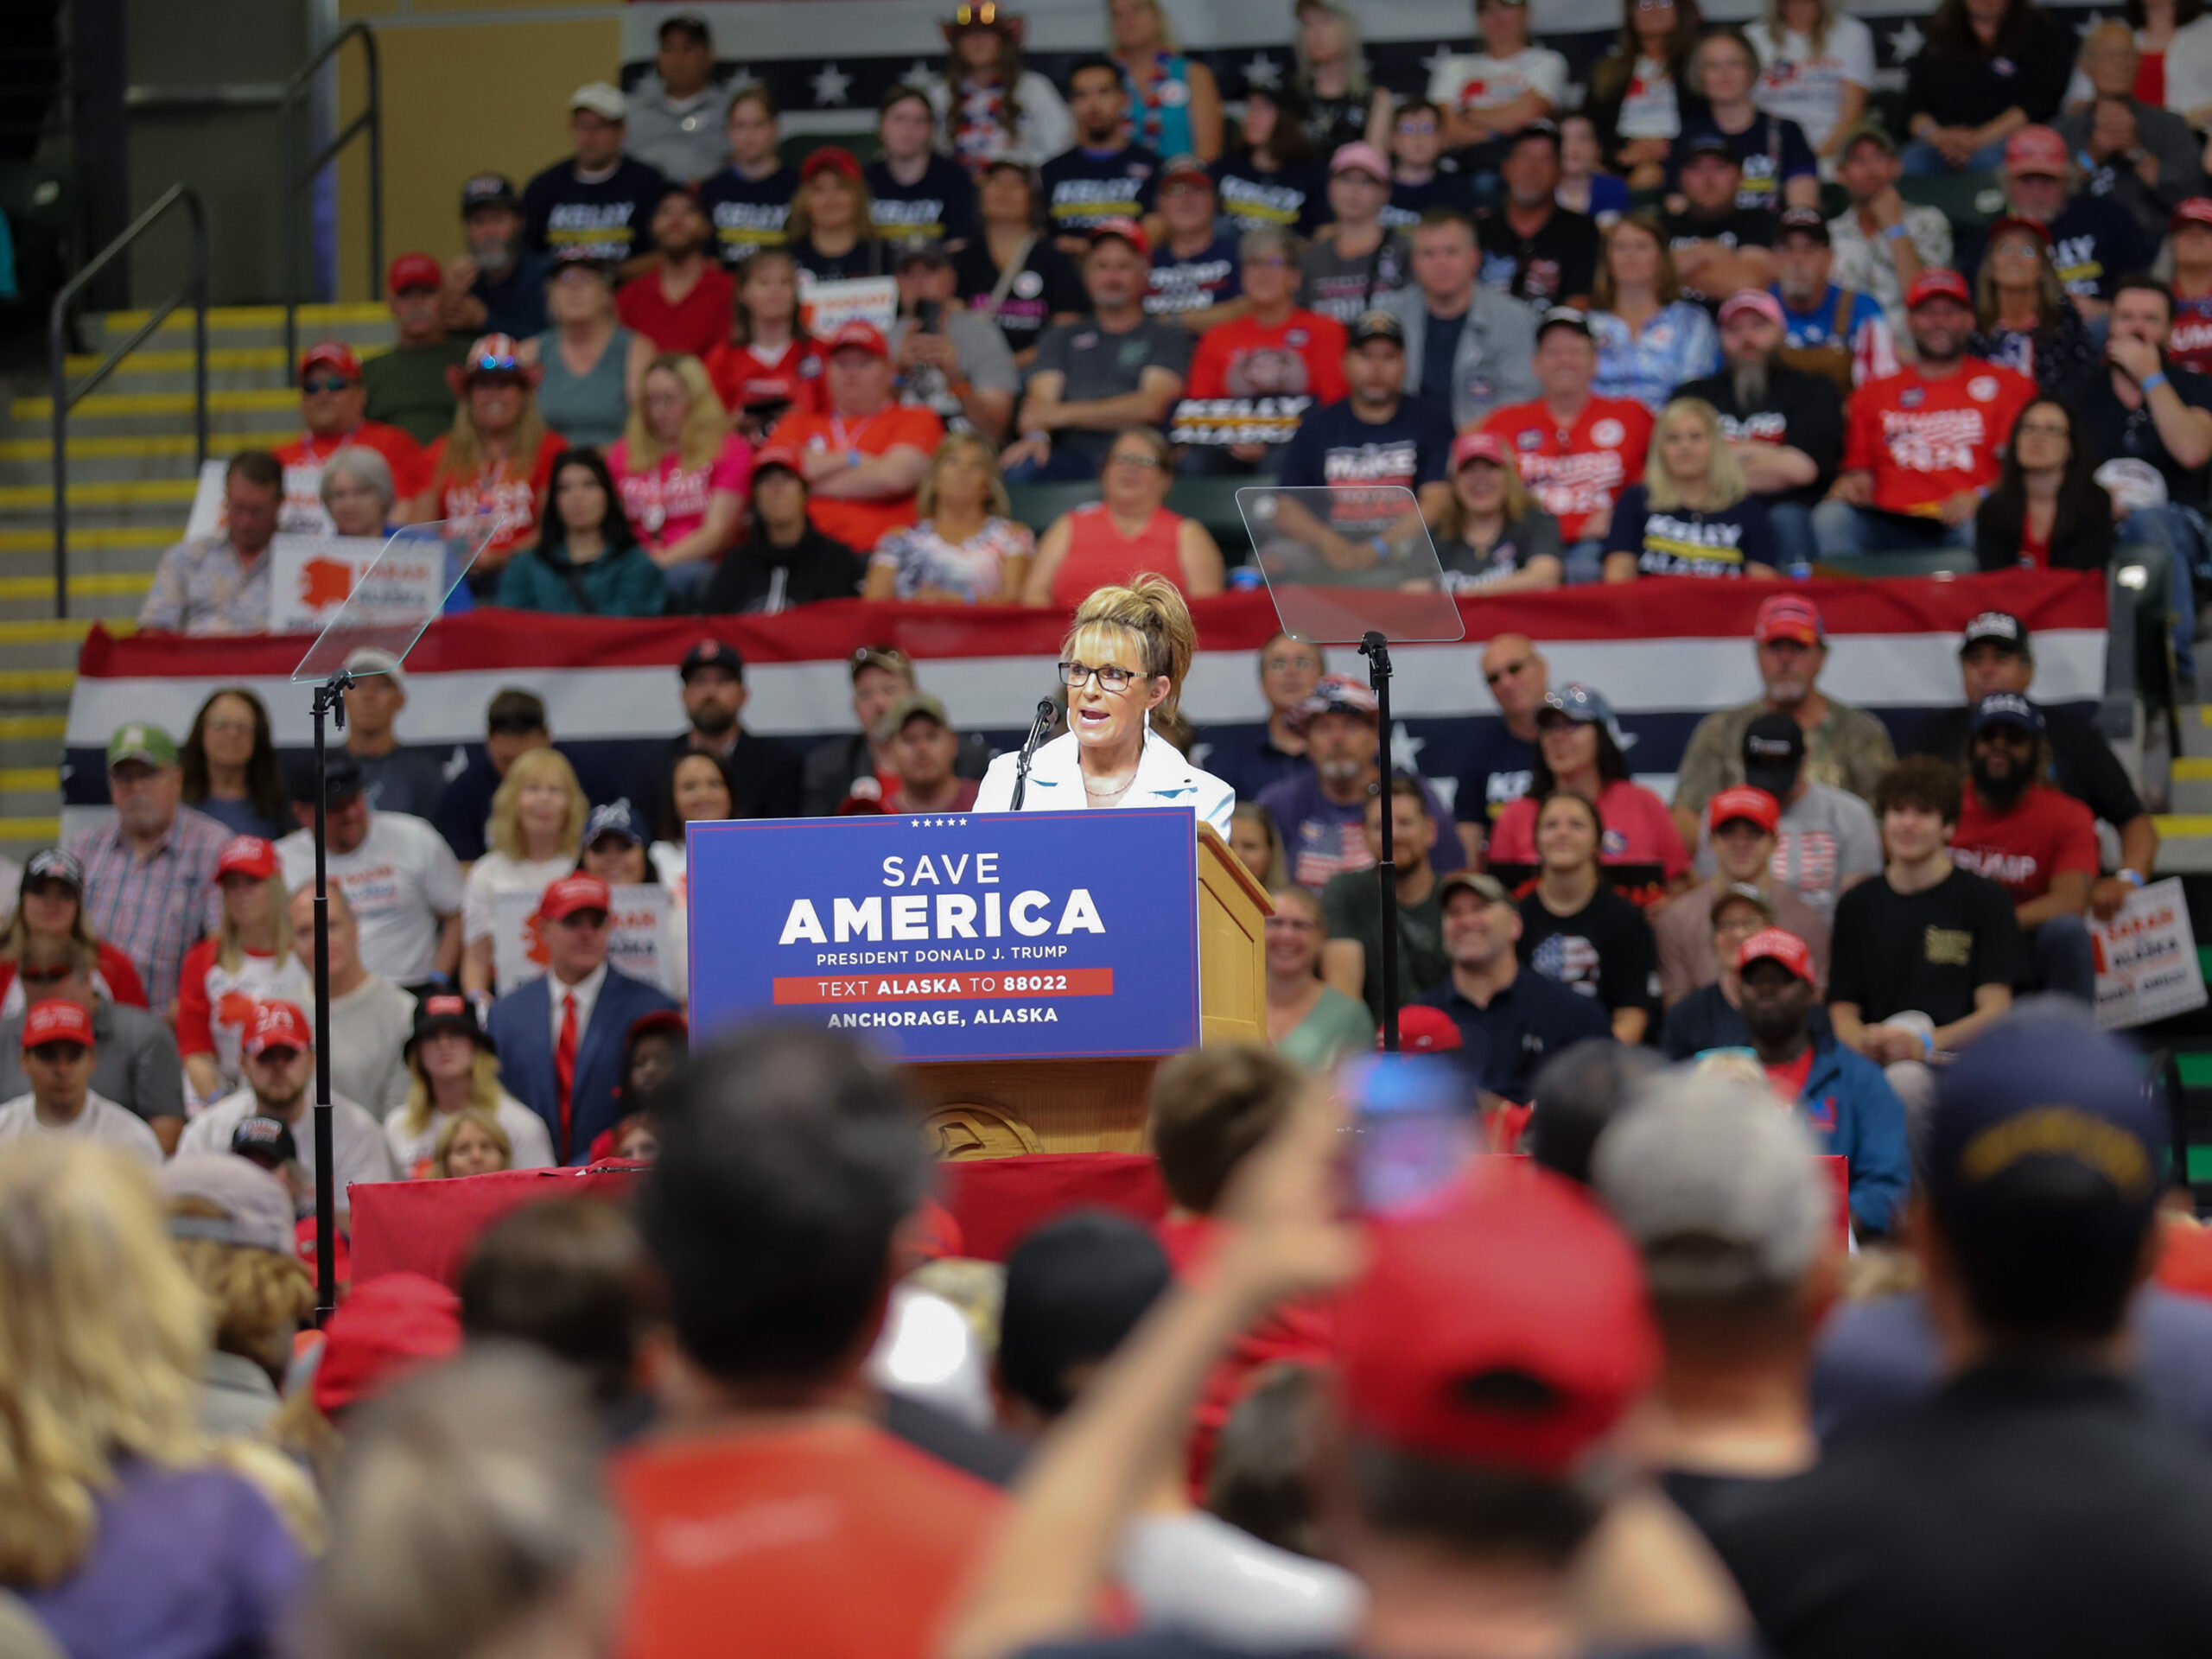 Sarah Palin speaks at a podium, a crowd surrounds her